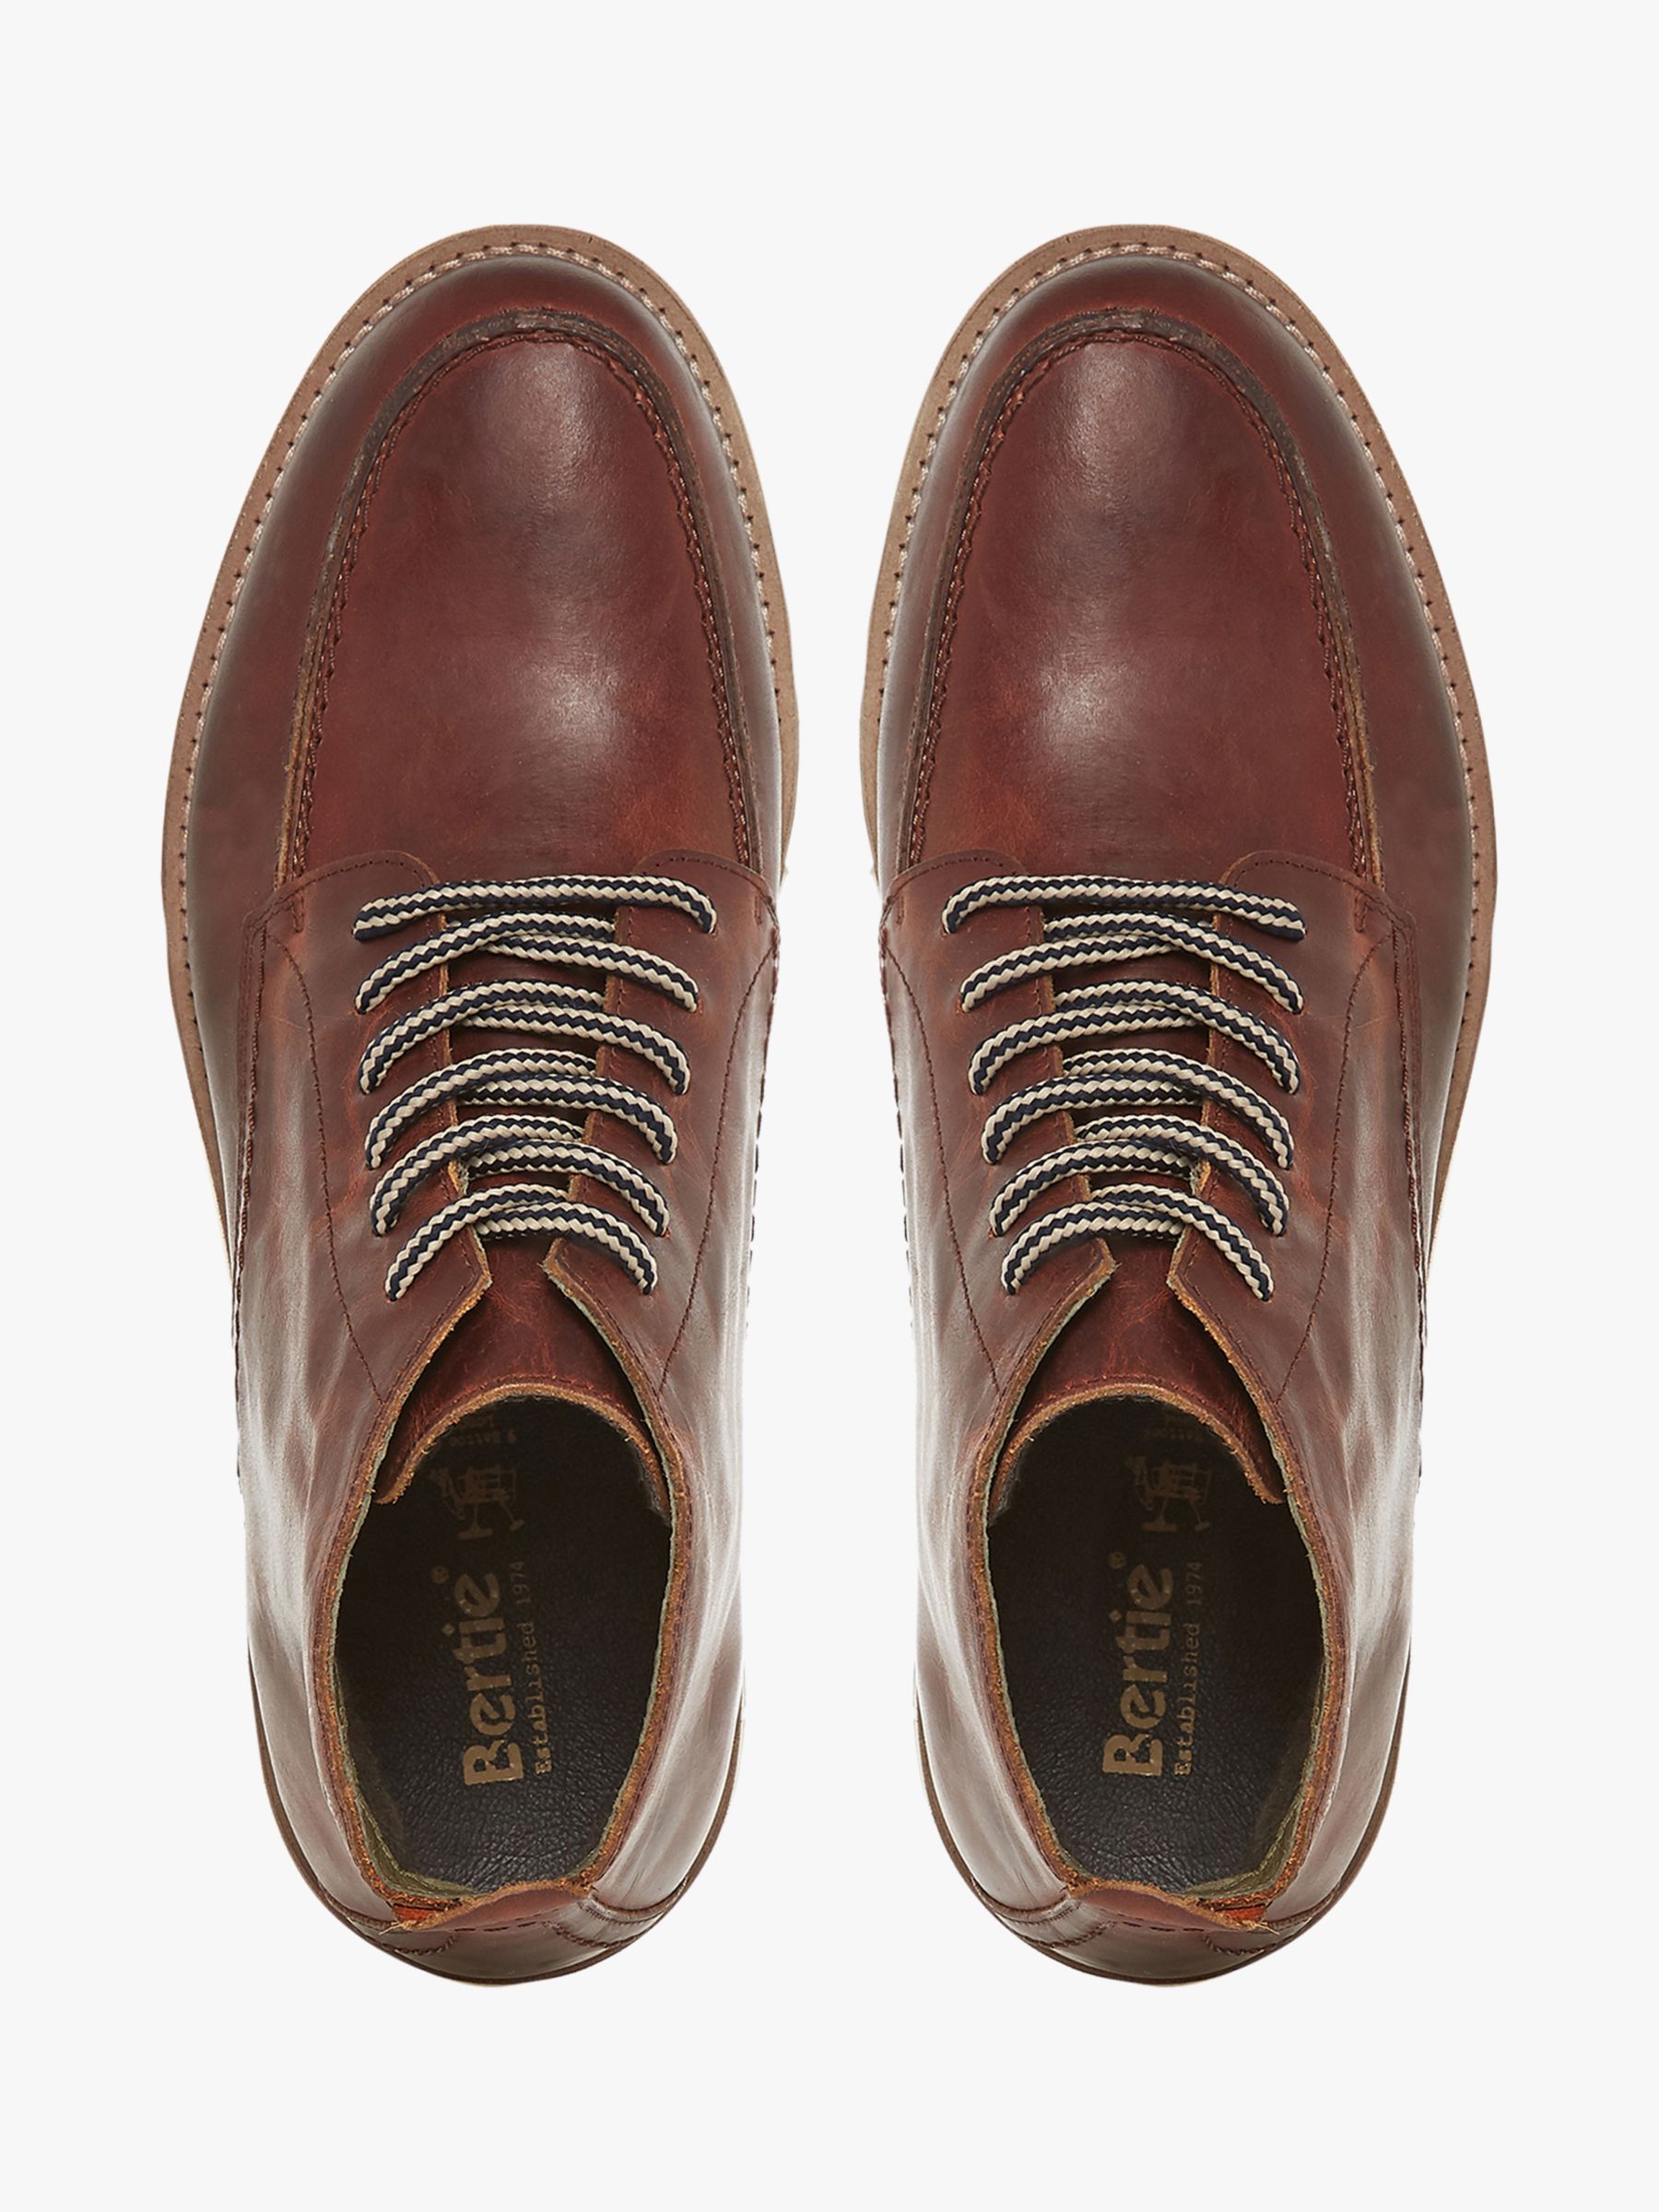 Bertie Cashin II Leather Boots, Tan at 